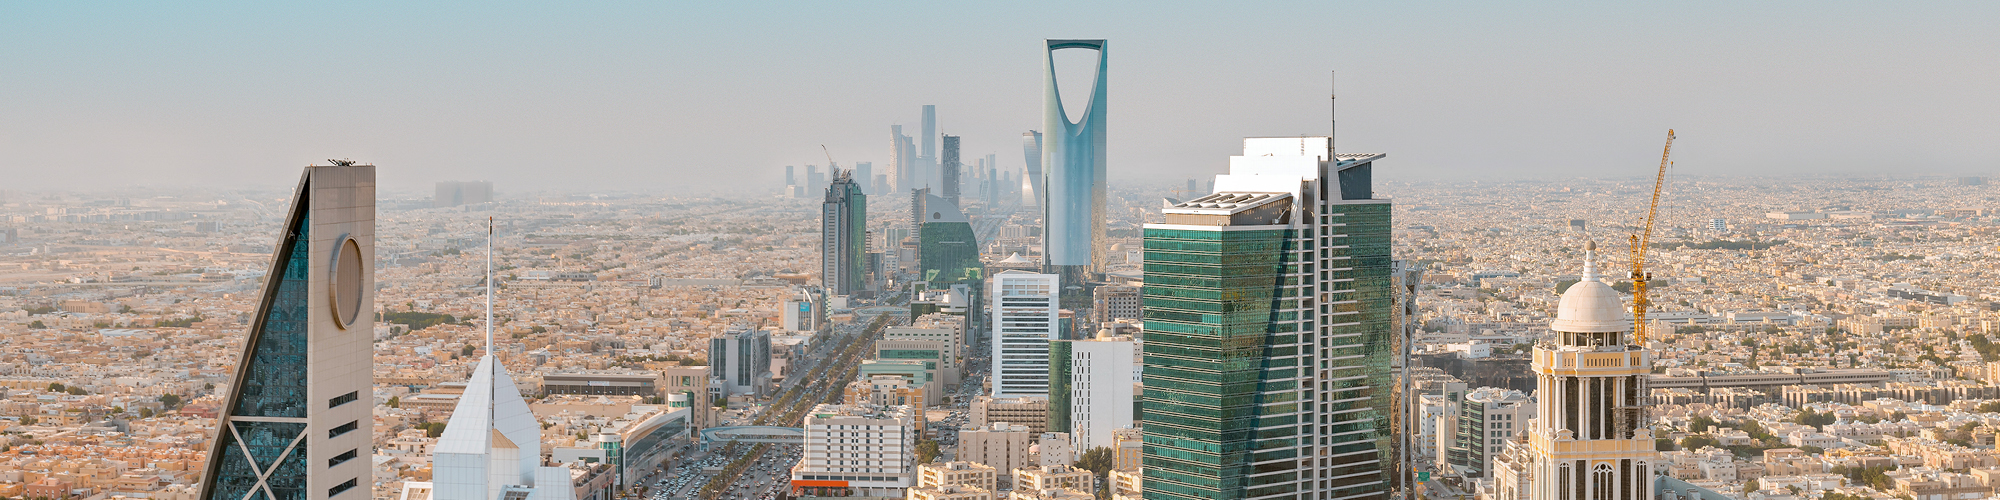 GTR Saudi Arabia 2021 Riyadh